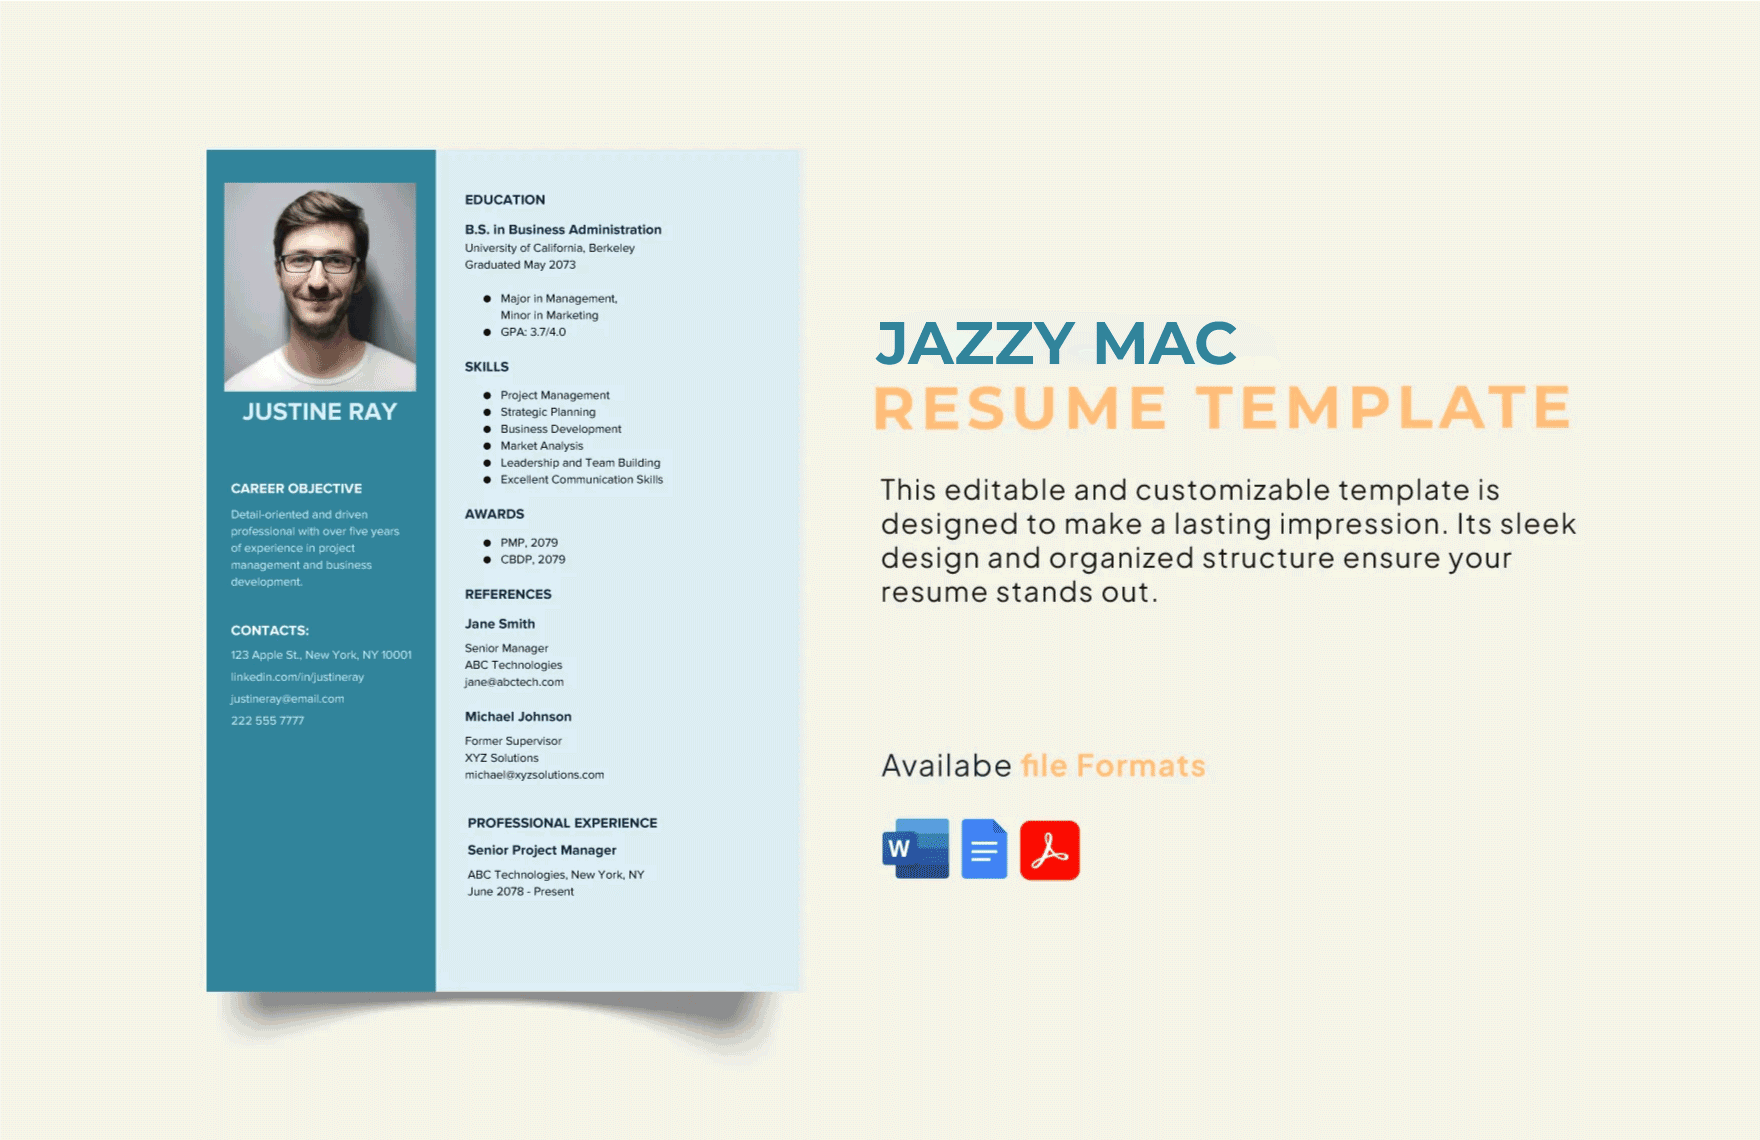 Jazzy Mac Resume Template